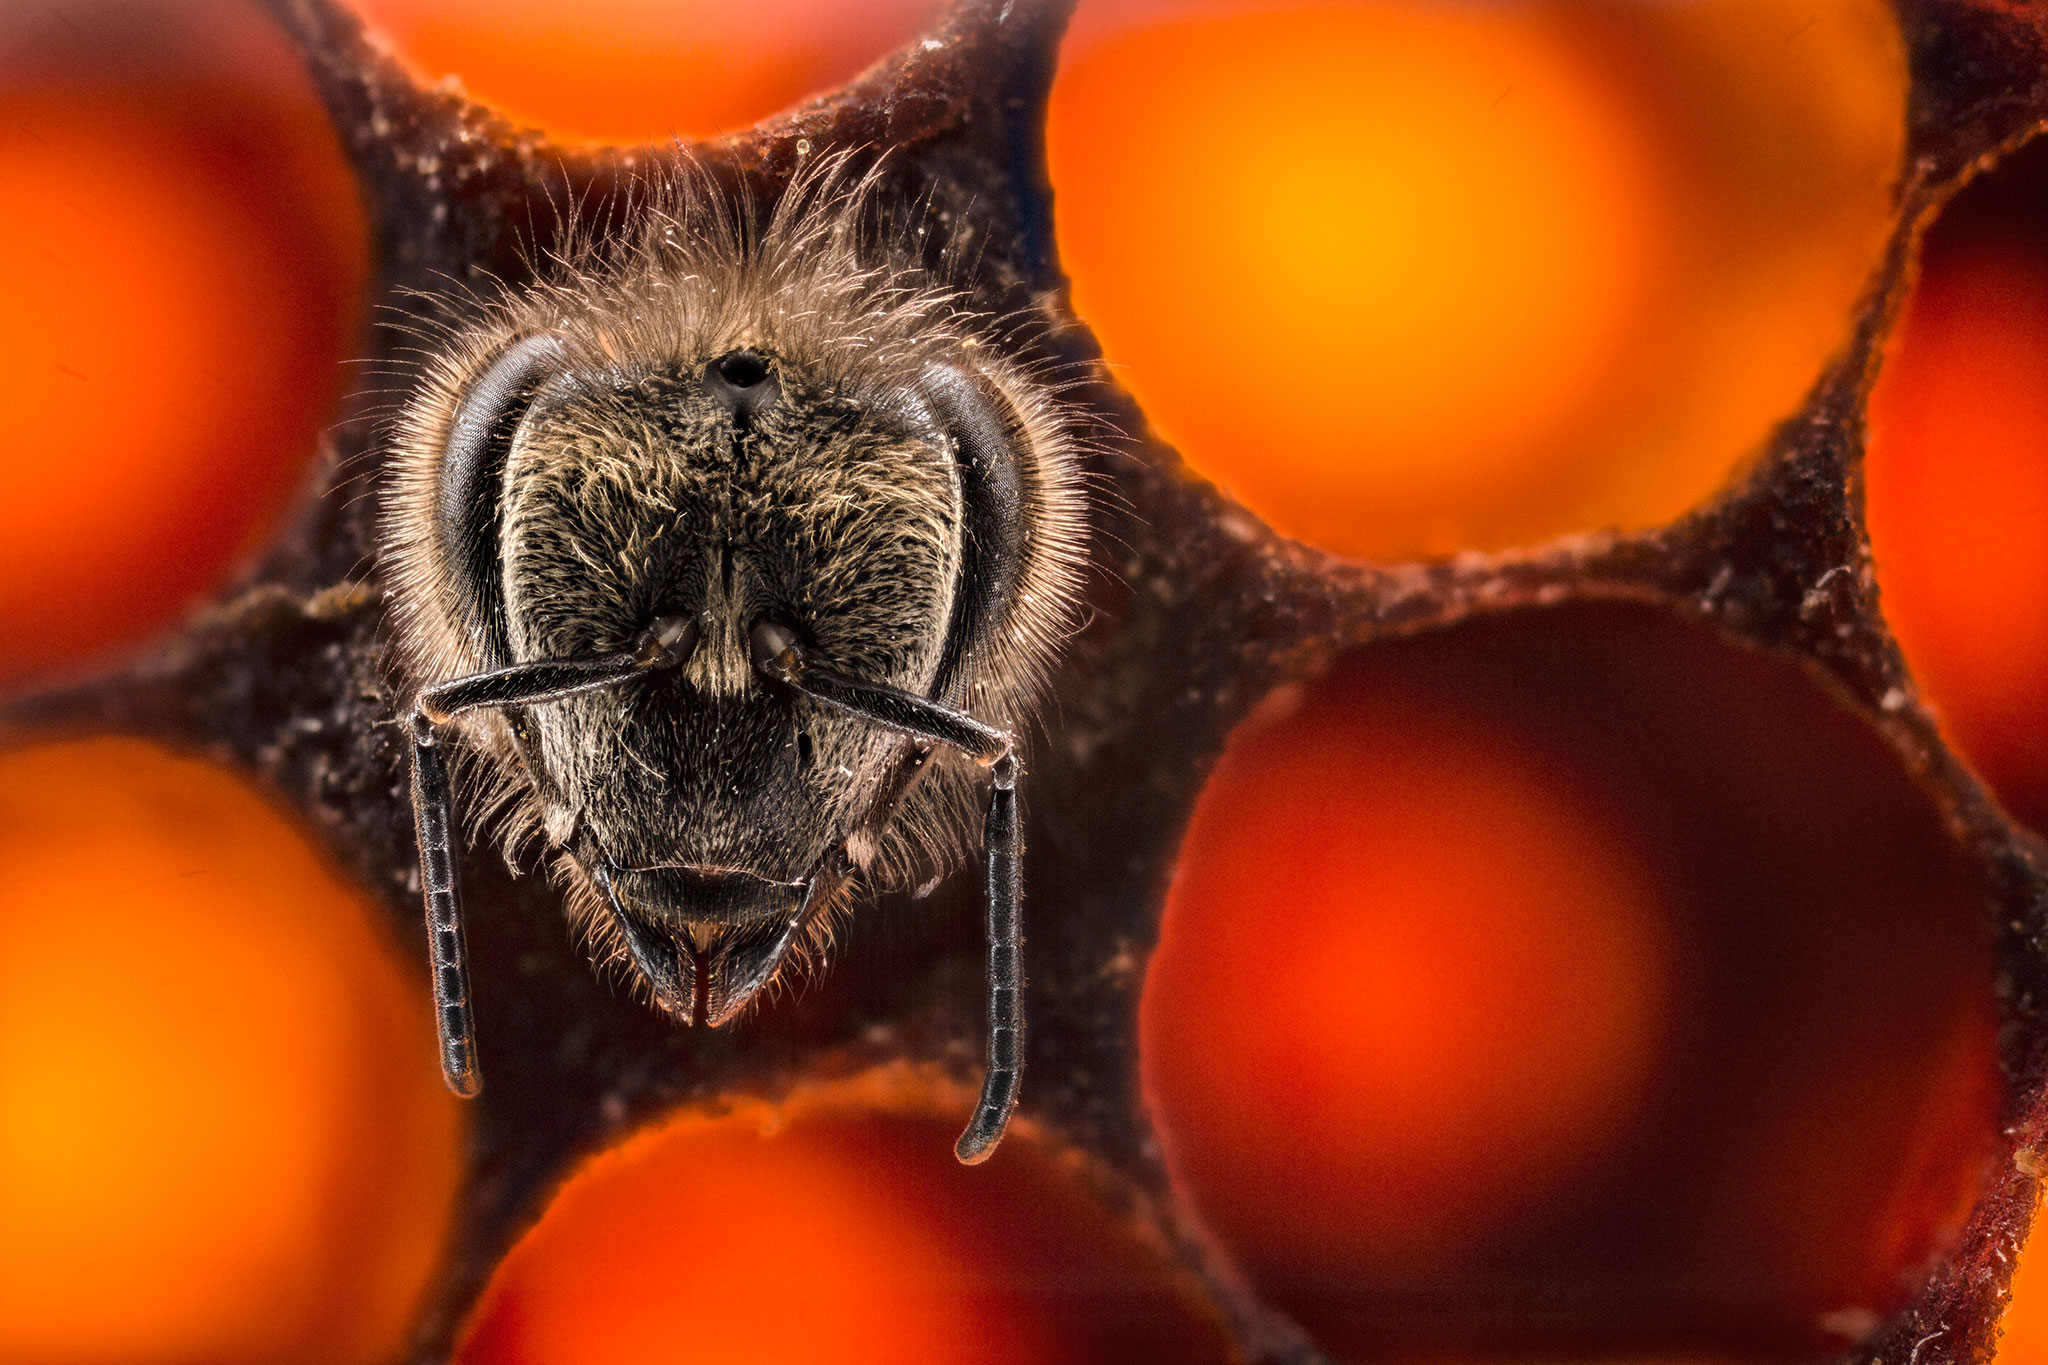 Mesmerizing Timelapse Film Captures the Wonder of Bees